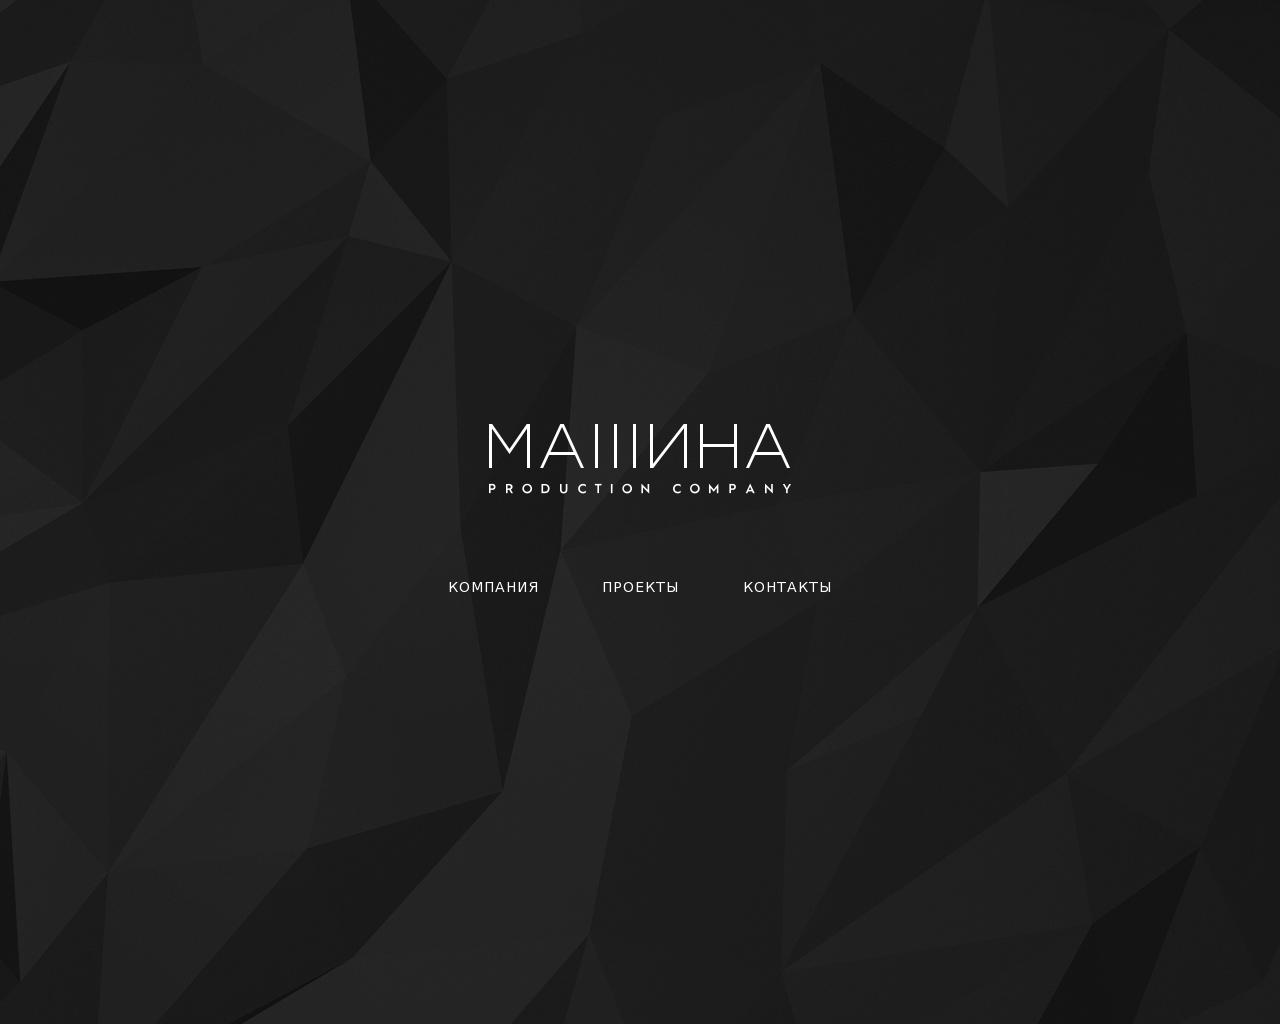 Изображение сайта mashina-production.ru в разрешении 1280x1024